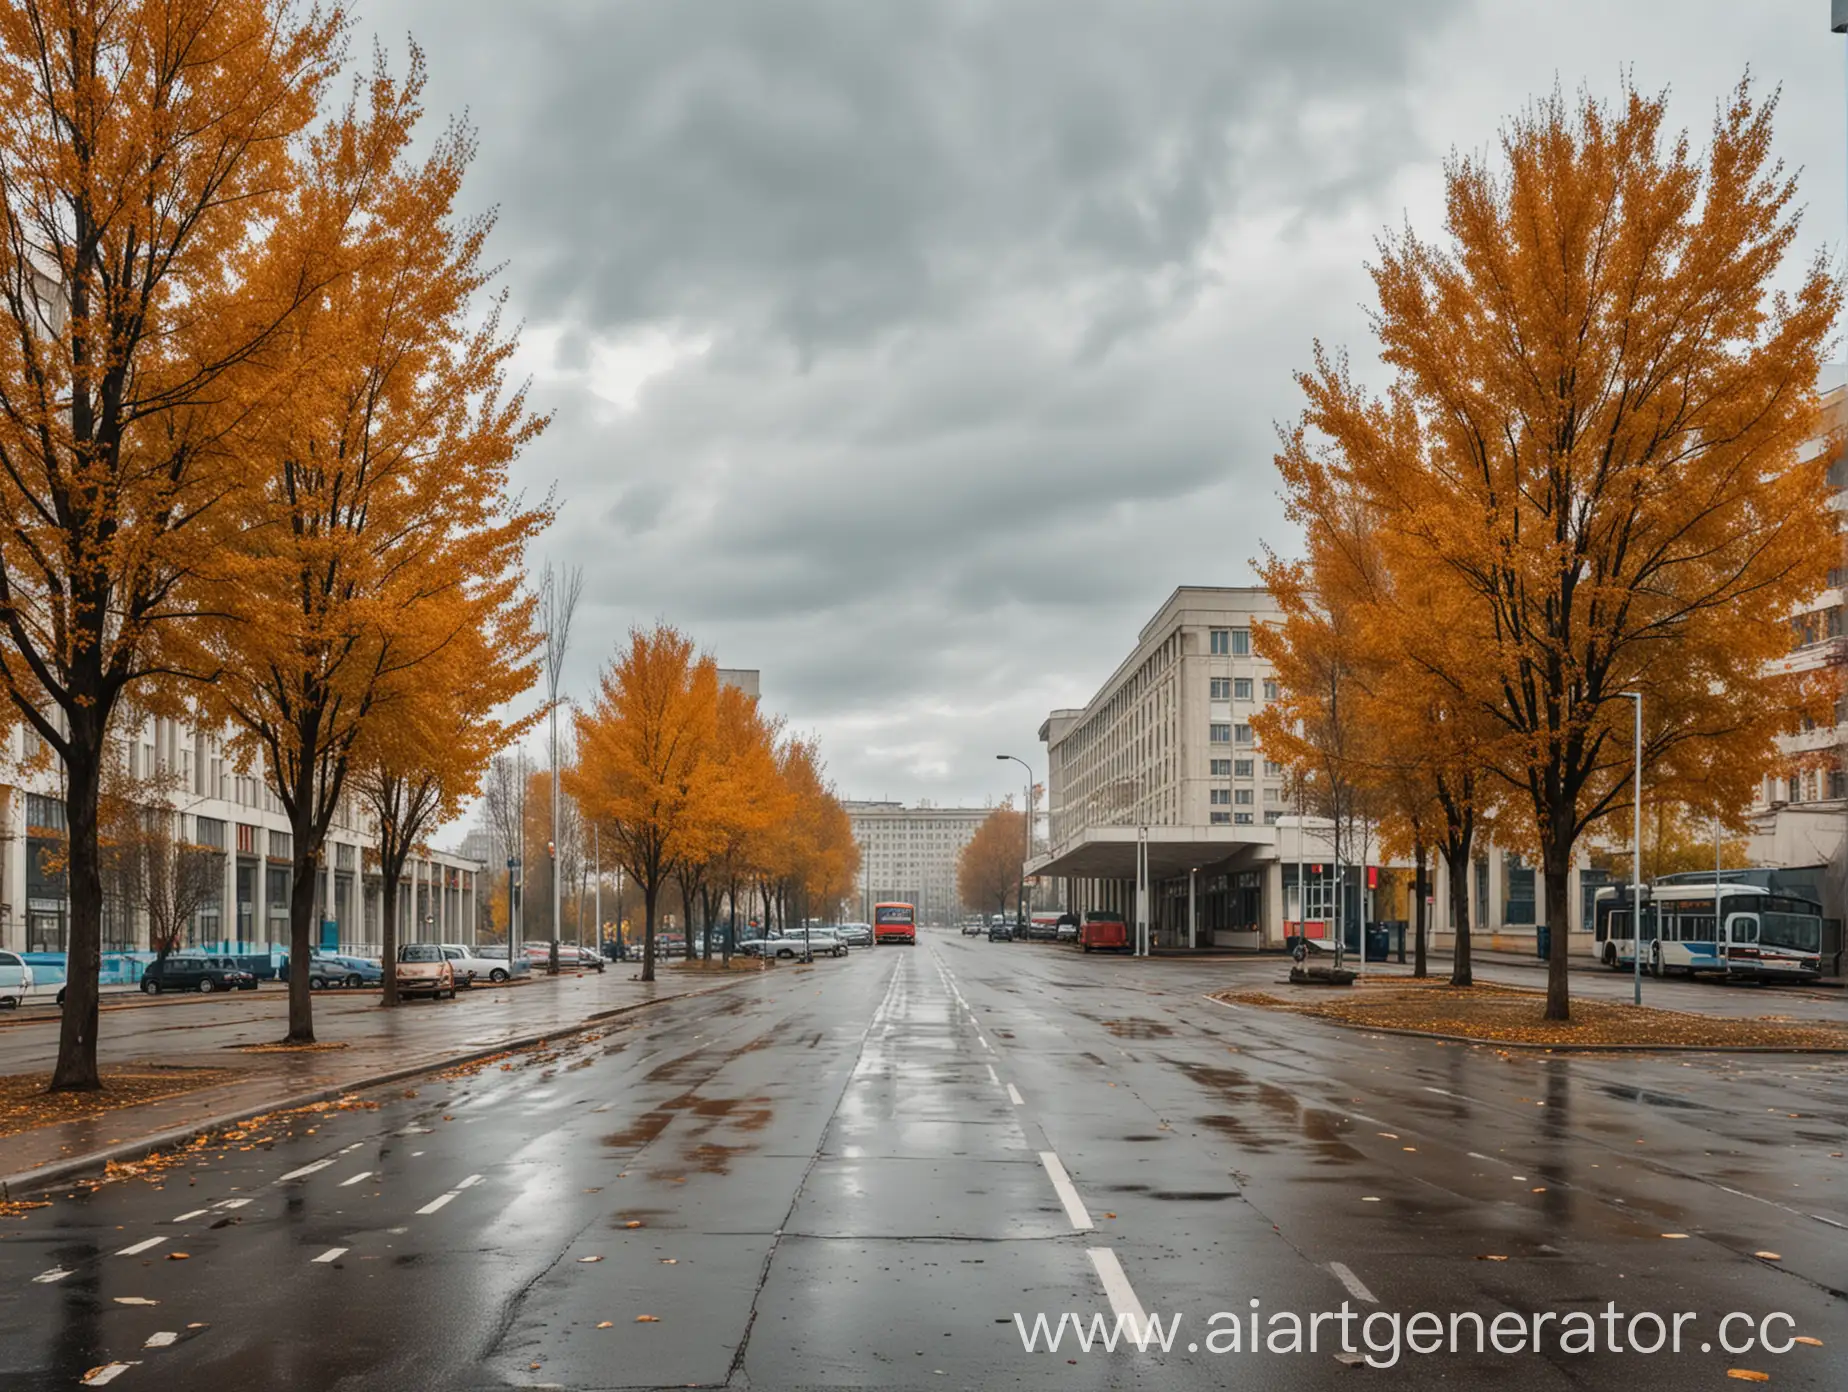 Soviet buildings street, trees. bus station, asphalt, autumn day cloudy